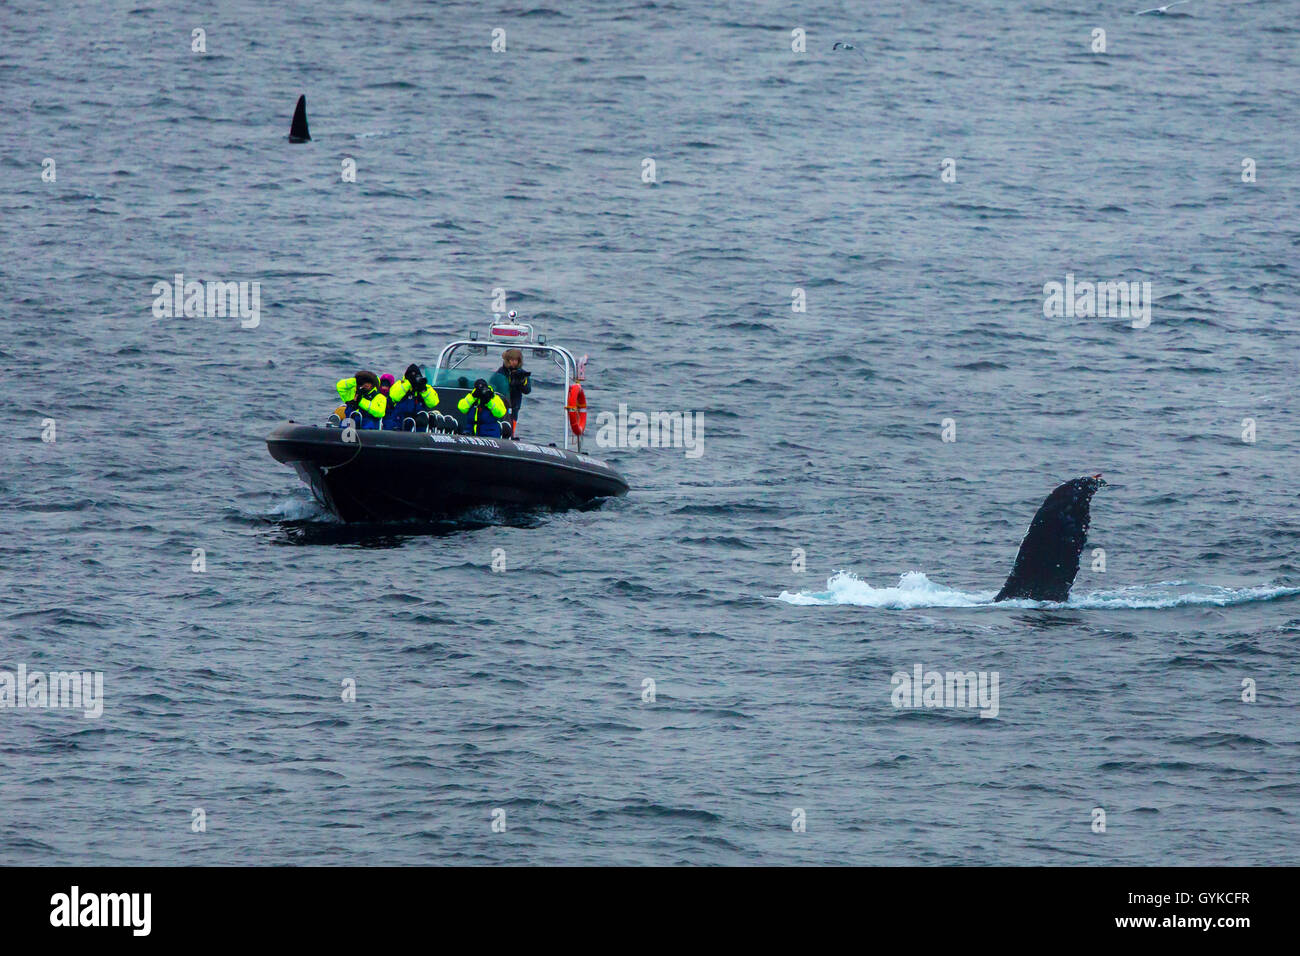 La ballena jorobada (Megaptera novaeangliae), Whale safari en barco cerca de sumergir la ballena jorobada, Noruega Fylke Troms, Senja Mefjord Foto de stock